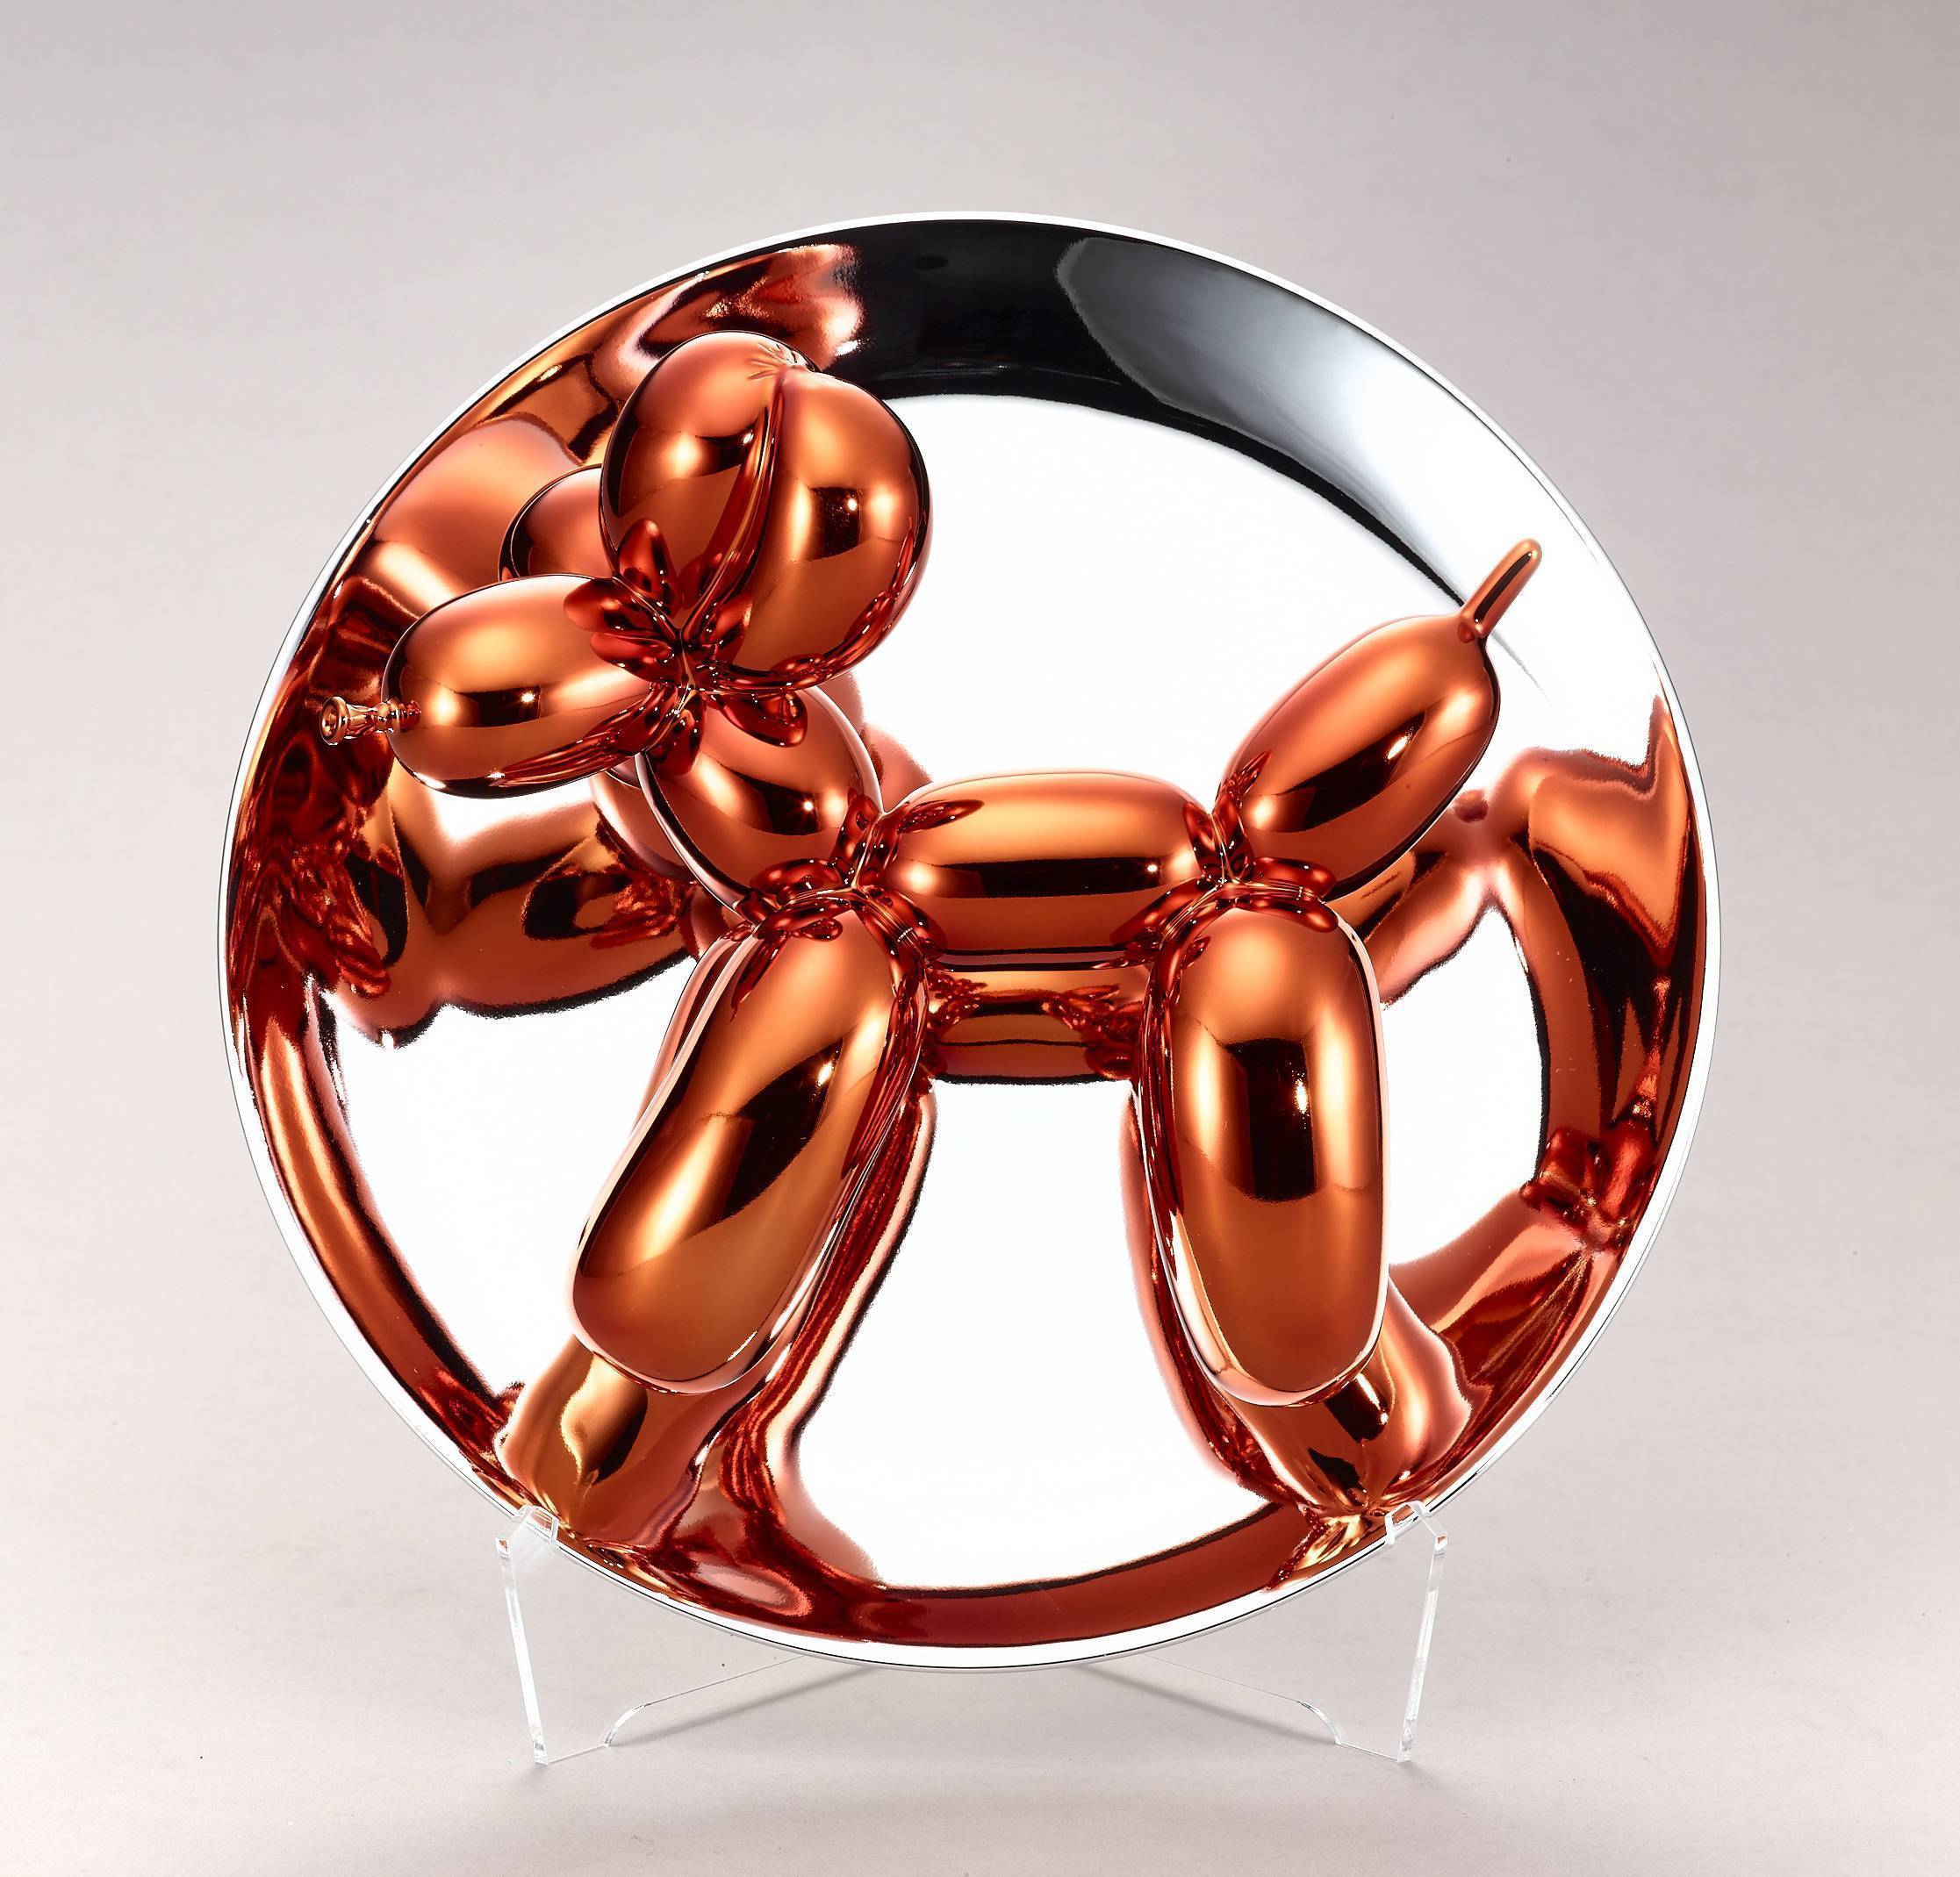 Balloon Dog (orange) 氣球狗 (澄橘) 26.7 x 26.7 x 12.7 cm Porcelain 陶瓷 2015 © Jeff Koons